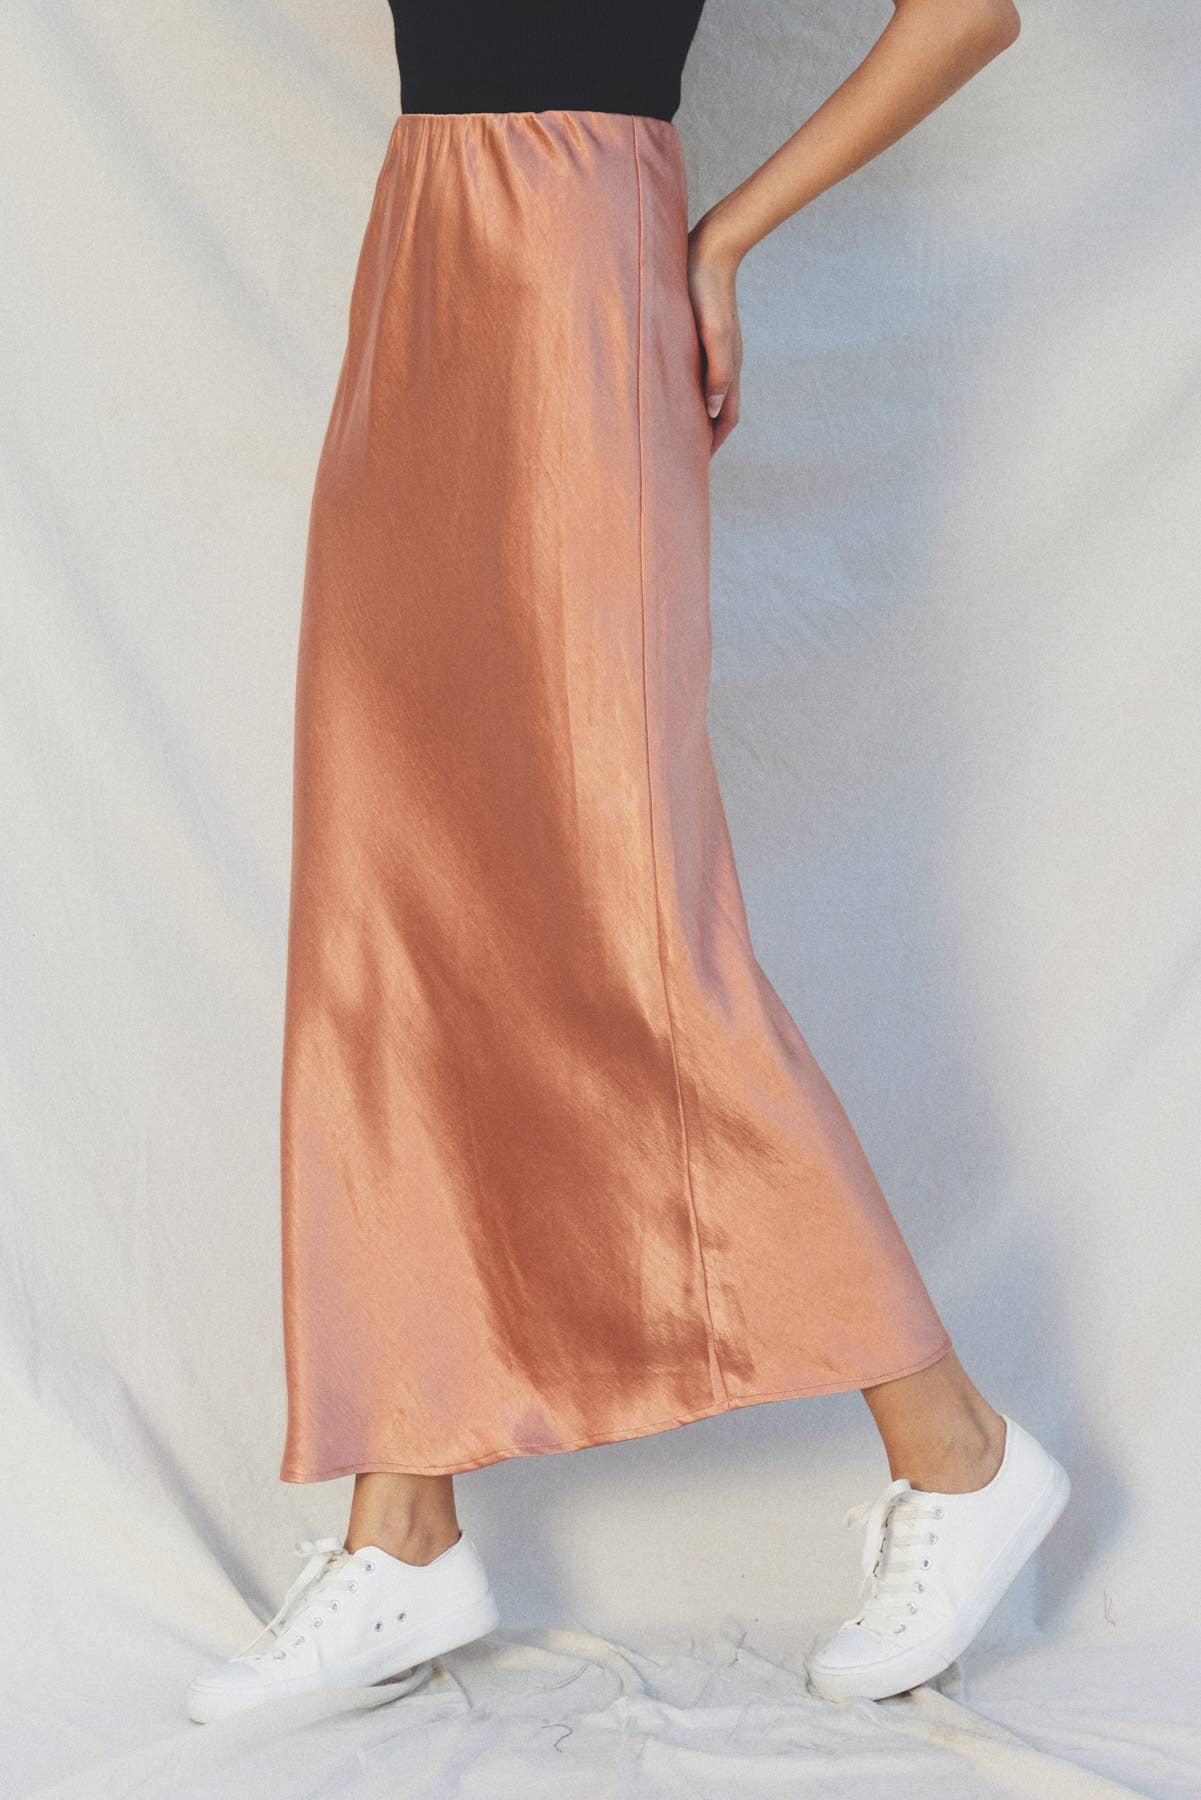 Dress Forum - Reflection Pull On Maxi Skirt - Golden Sand